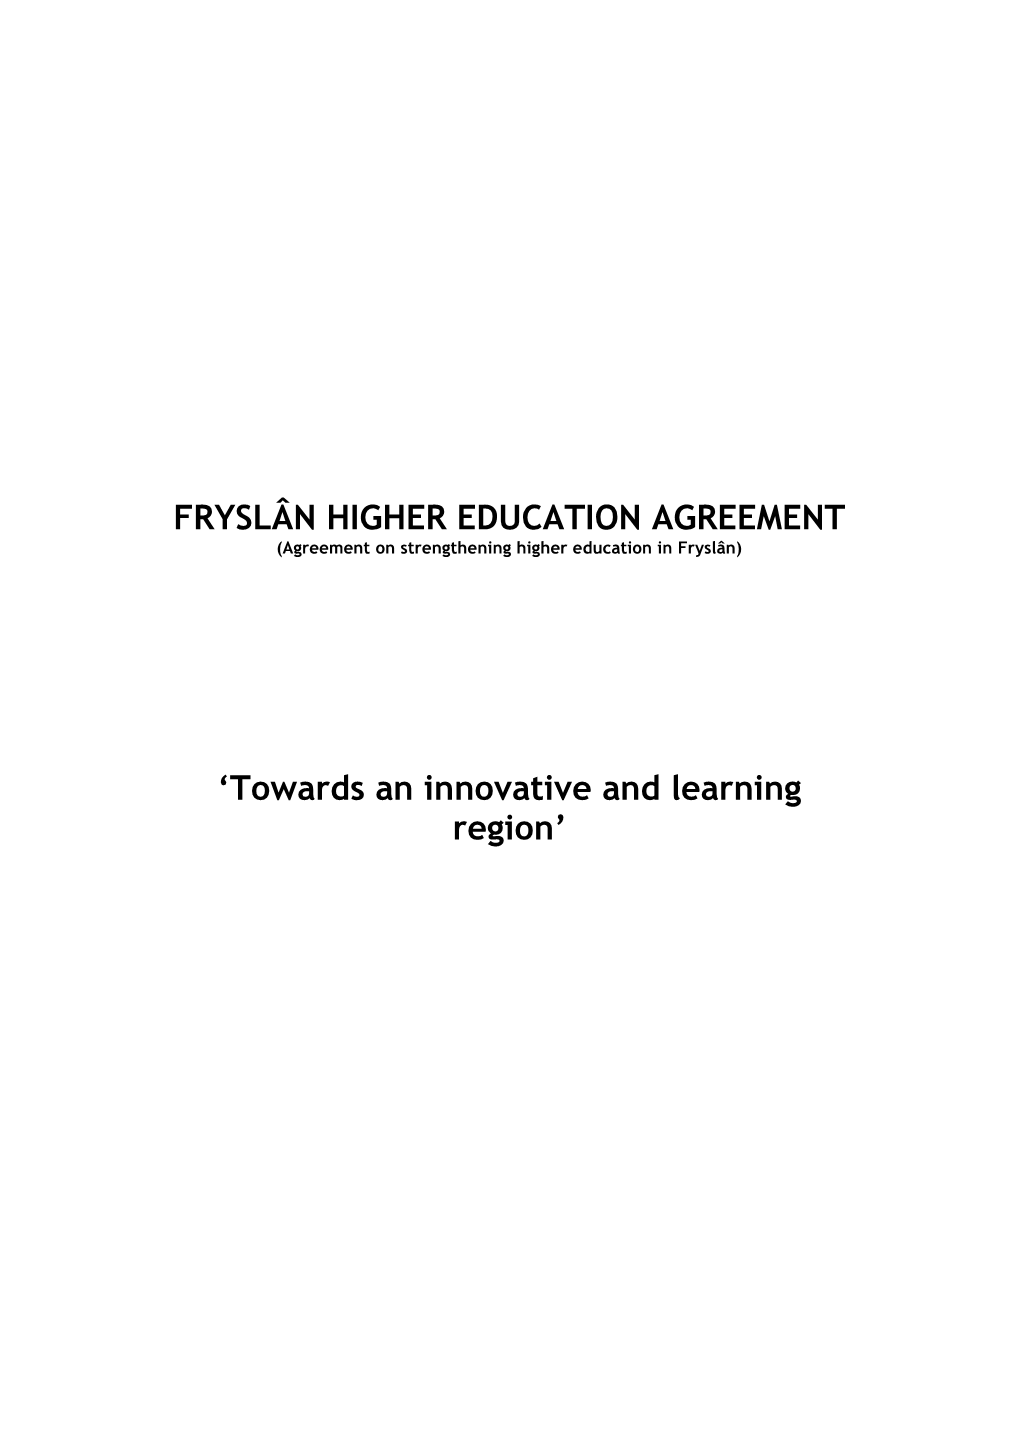 FRYSLÂN HIGHER EDUCATION AGREEMENT (Agreement on Strengthening Higher Education in Fryslân)